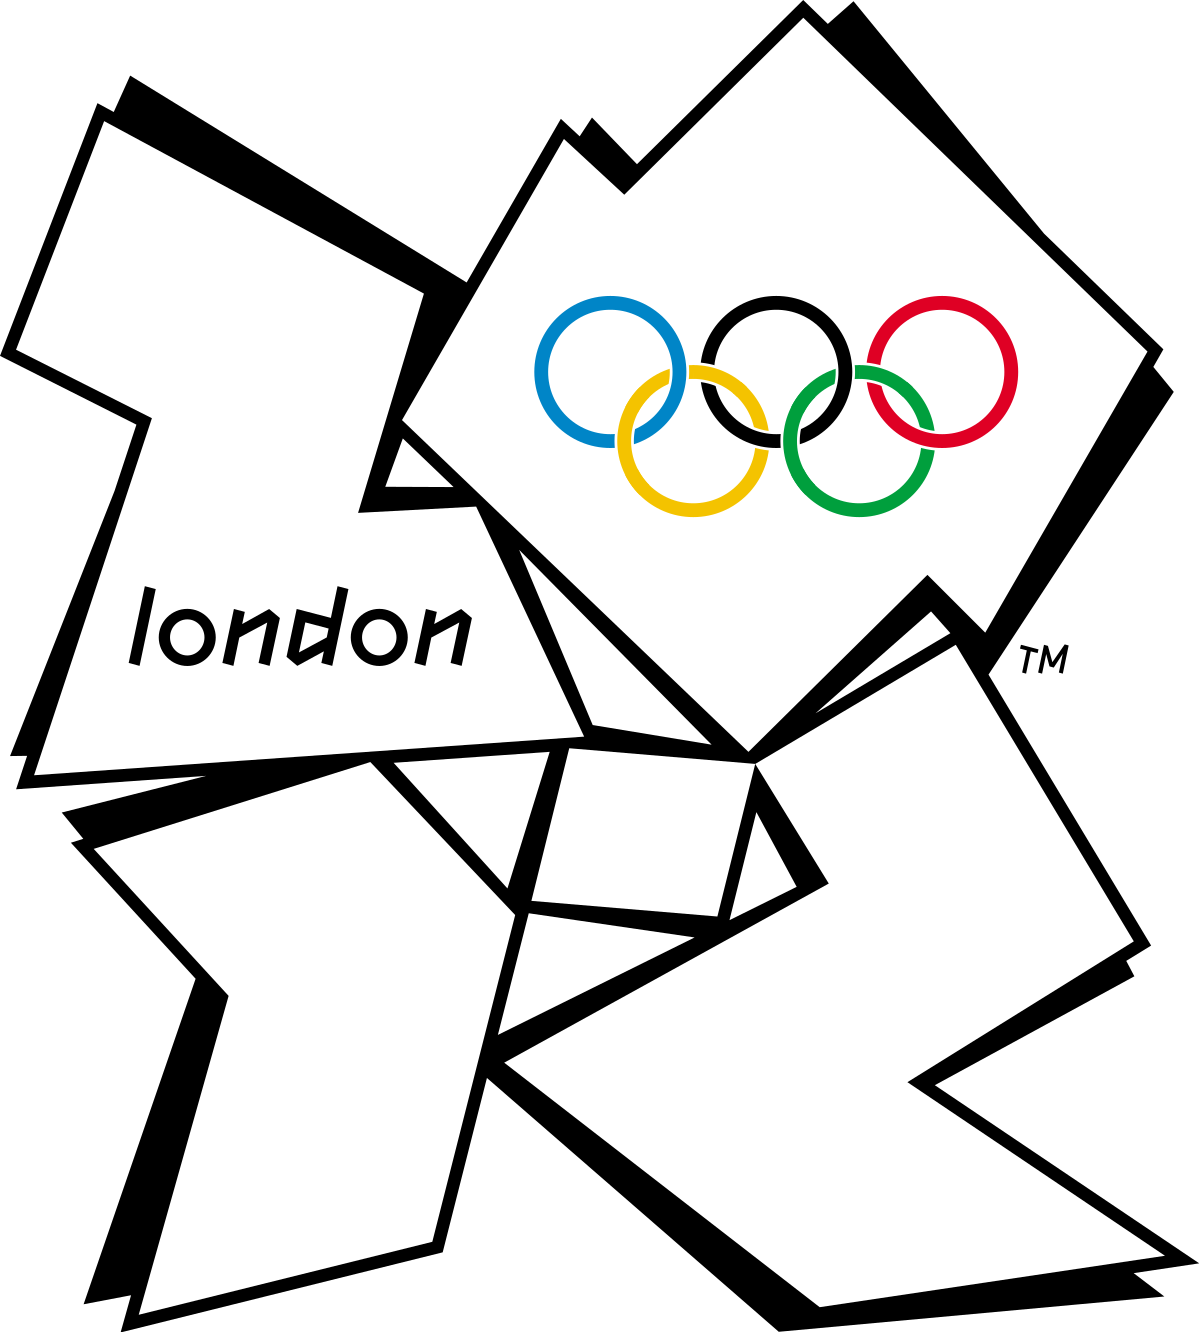 London 2012 Summer Olympics logo